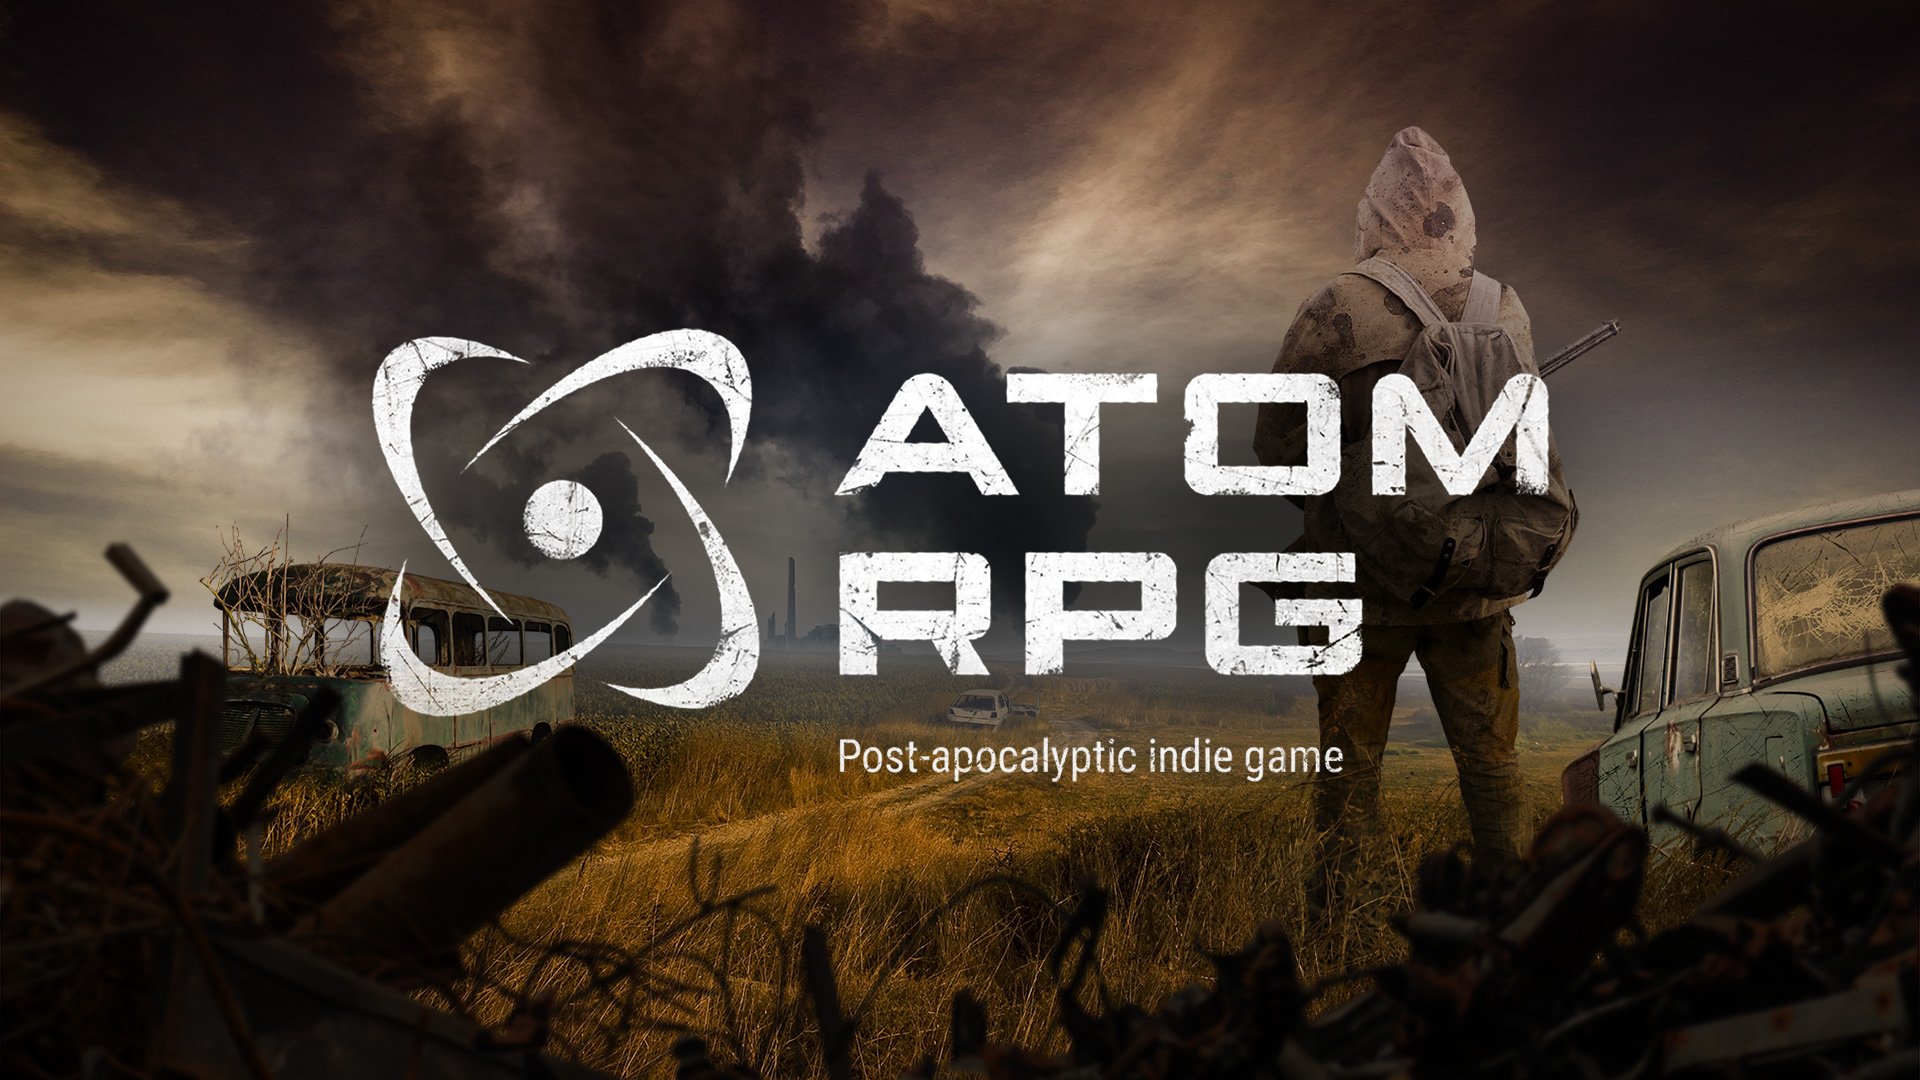 free for mac download ATOM RPG Trudograd